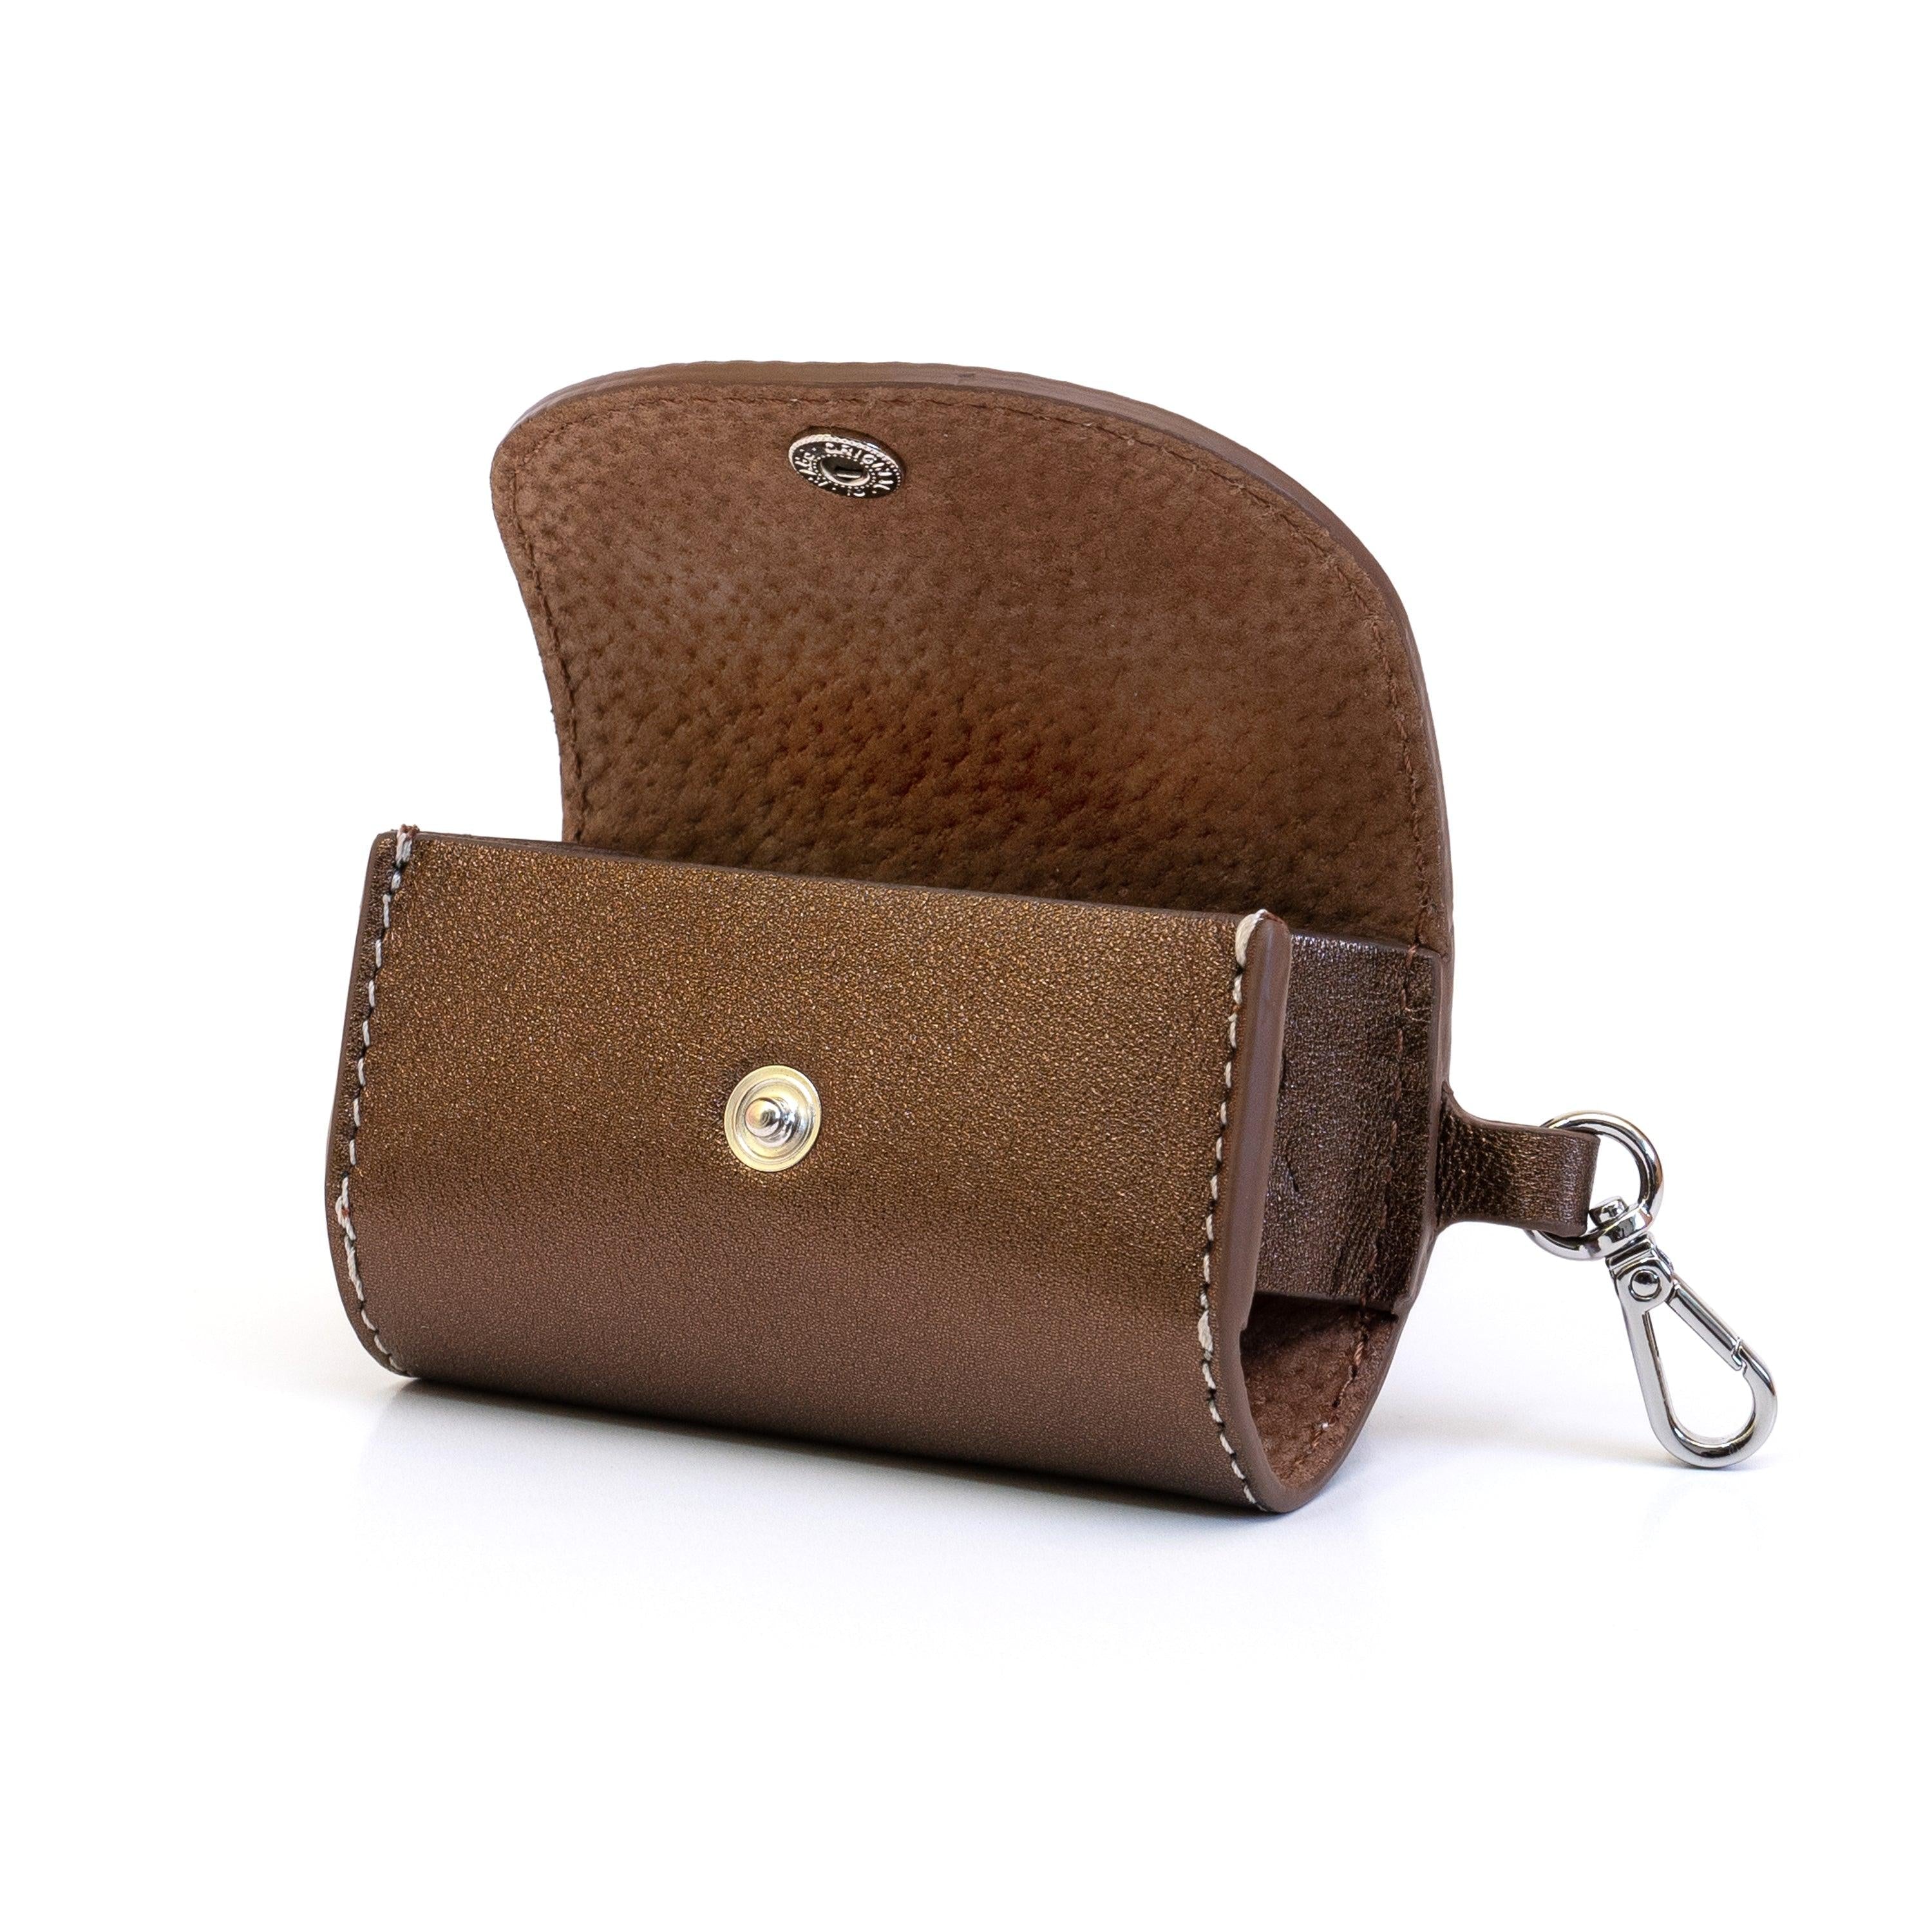 Harness Handbag by Restyle brand